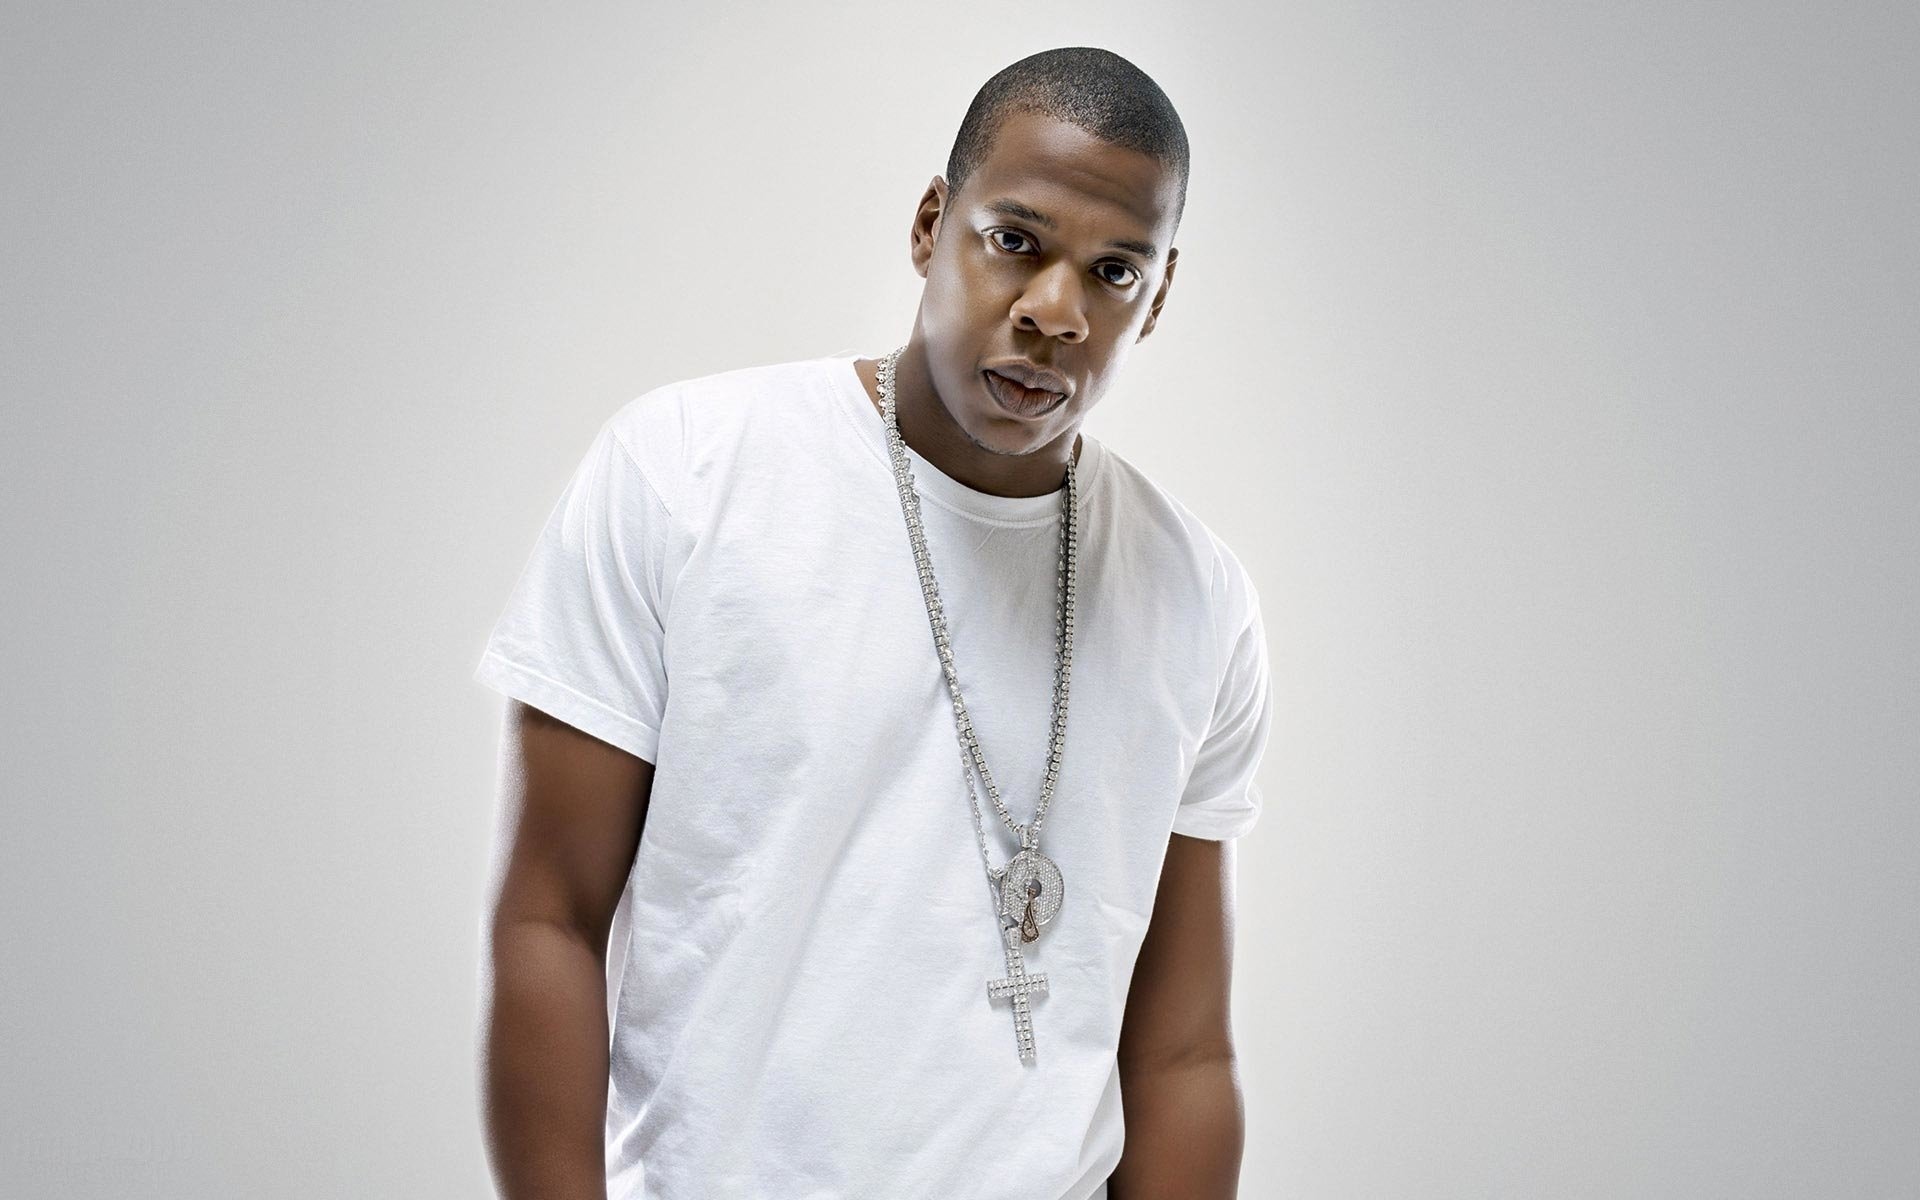 Jay-Z, HD wallpapers, Background images, Stylish rapper, 1920x1200 HD Desktop